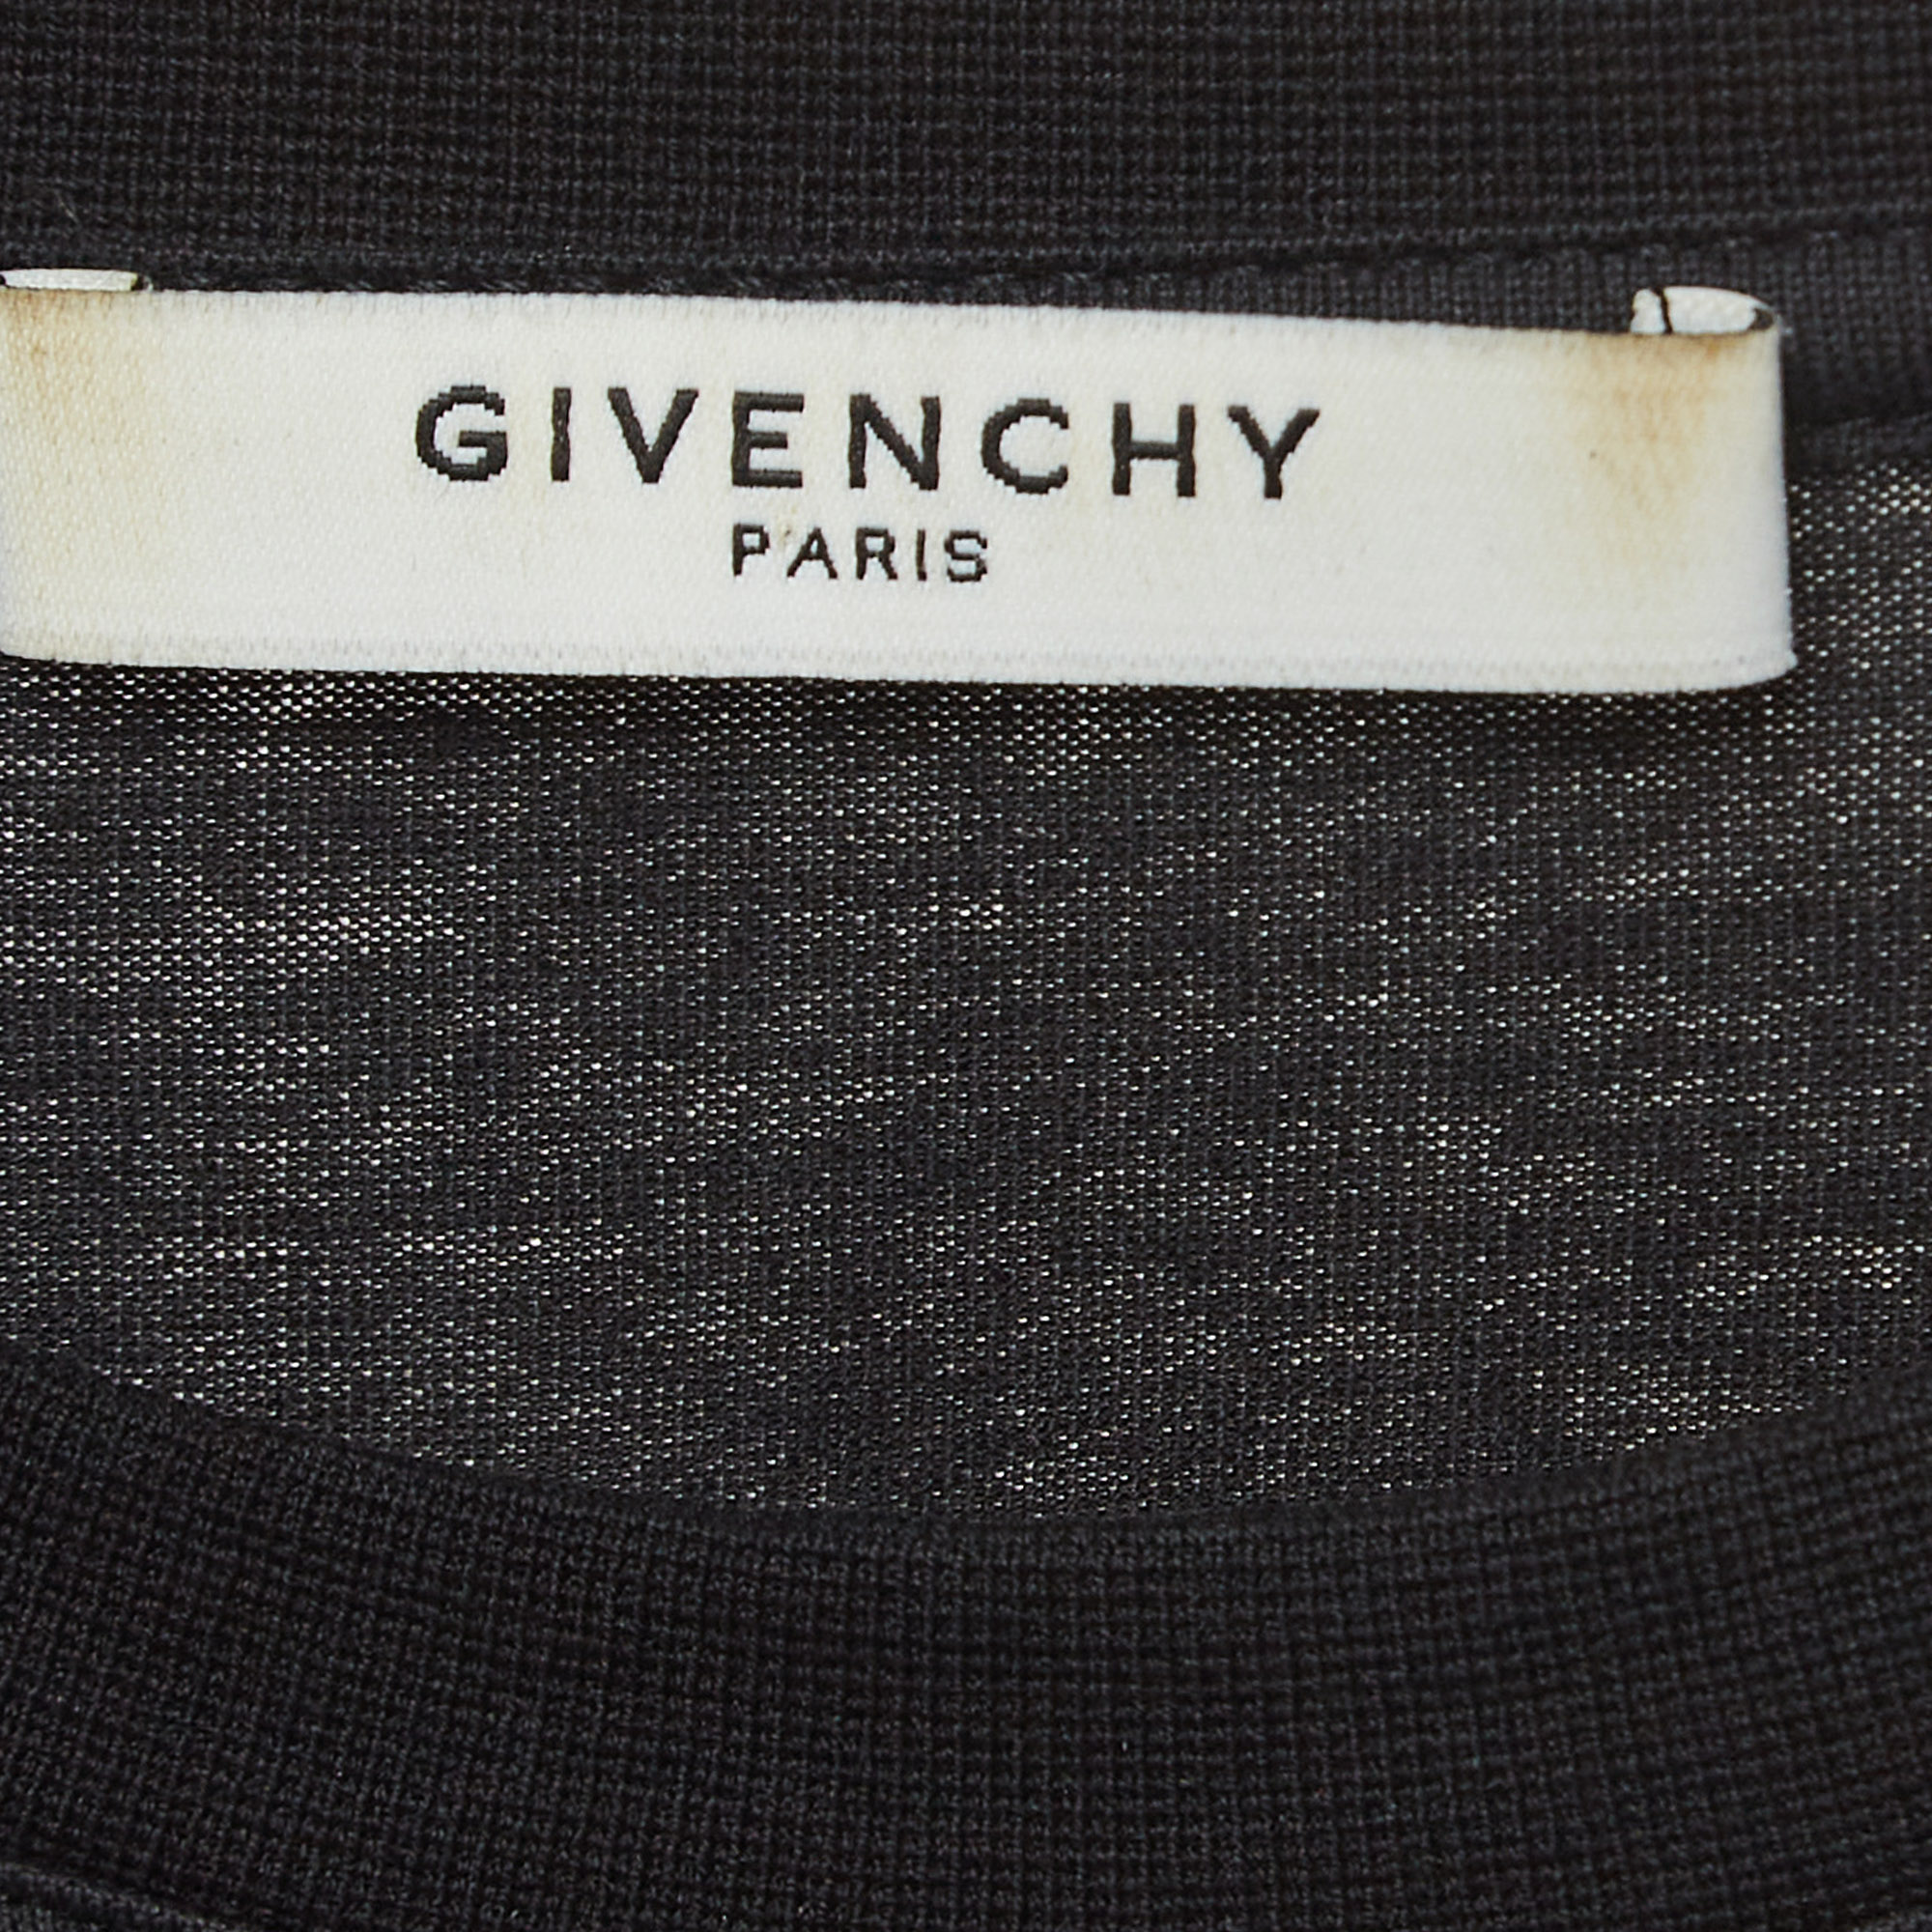 Givenchy Black Printed Cotton Knit Tank Top XS